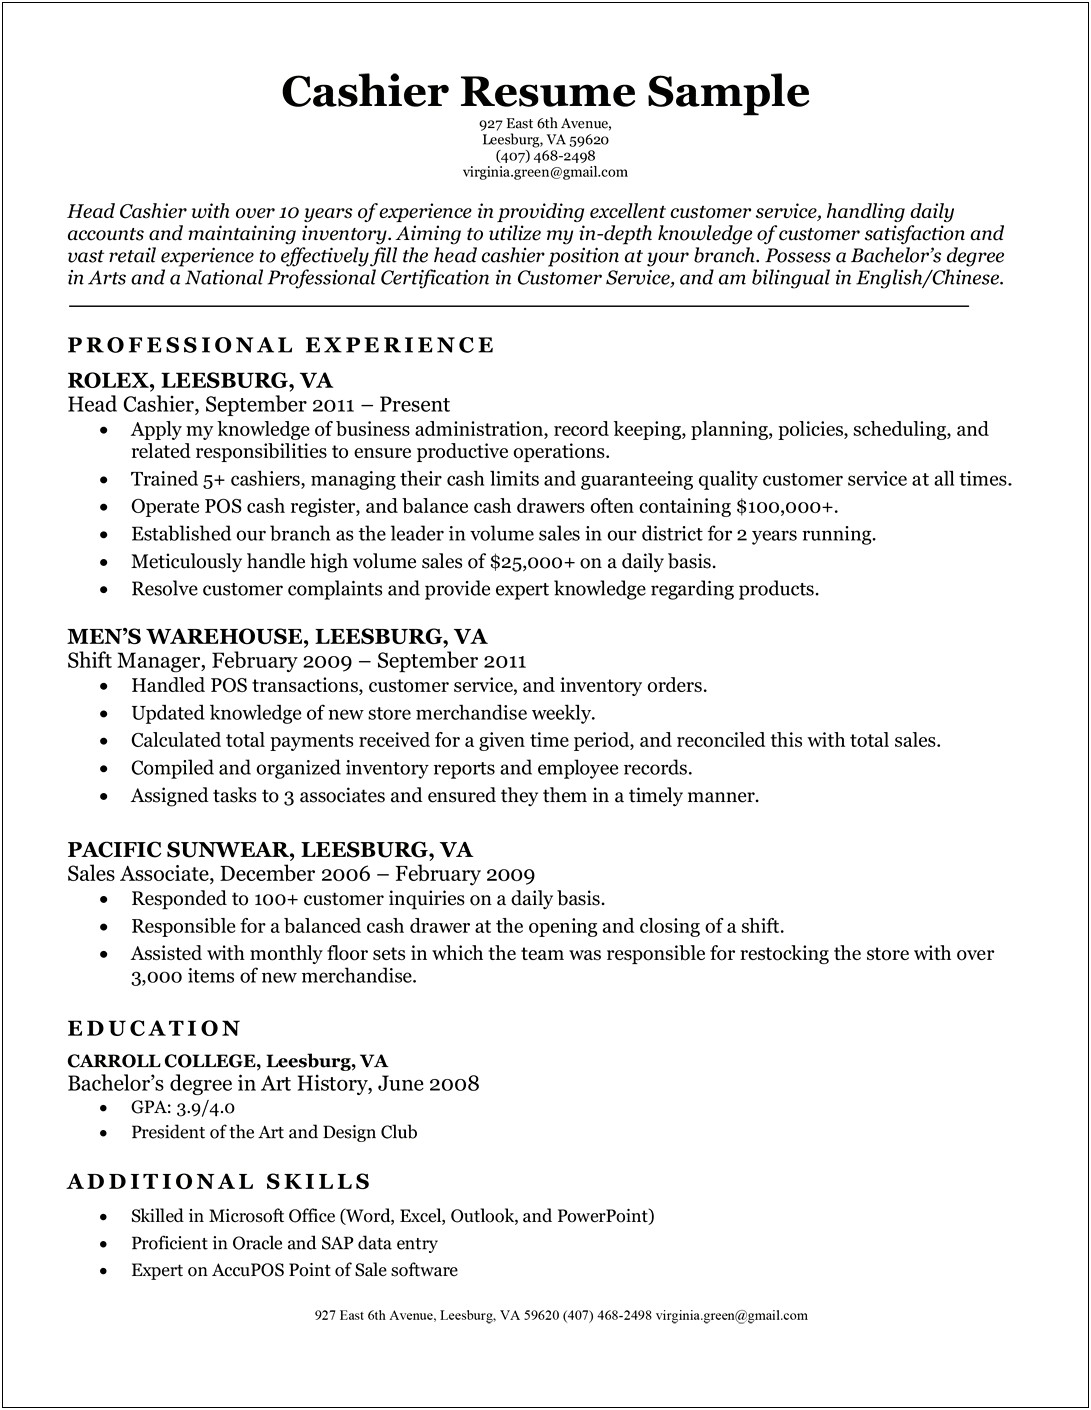 Resume Objective For Cashier Job